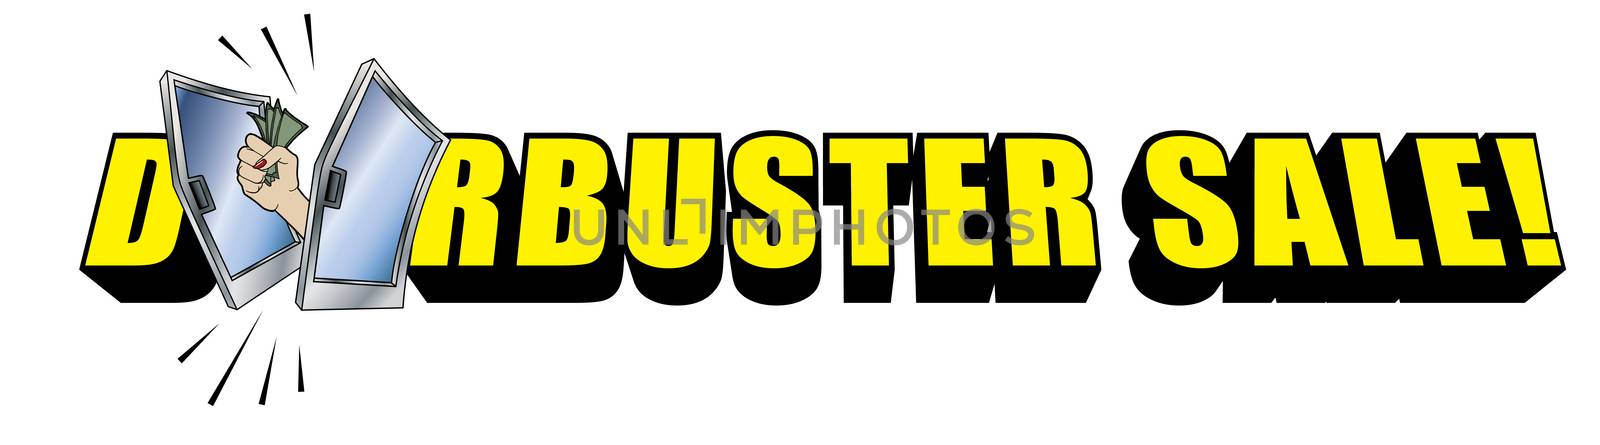 Doorbuster Sale Copy Logo on White Background by illstudio